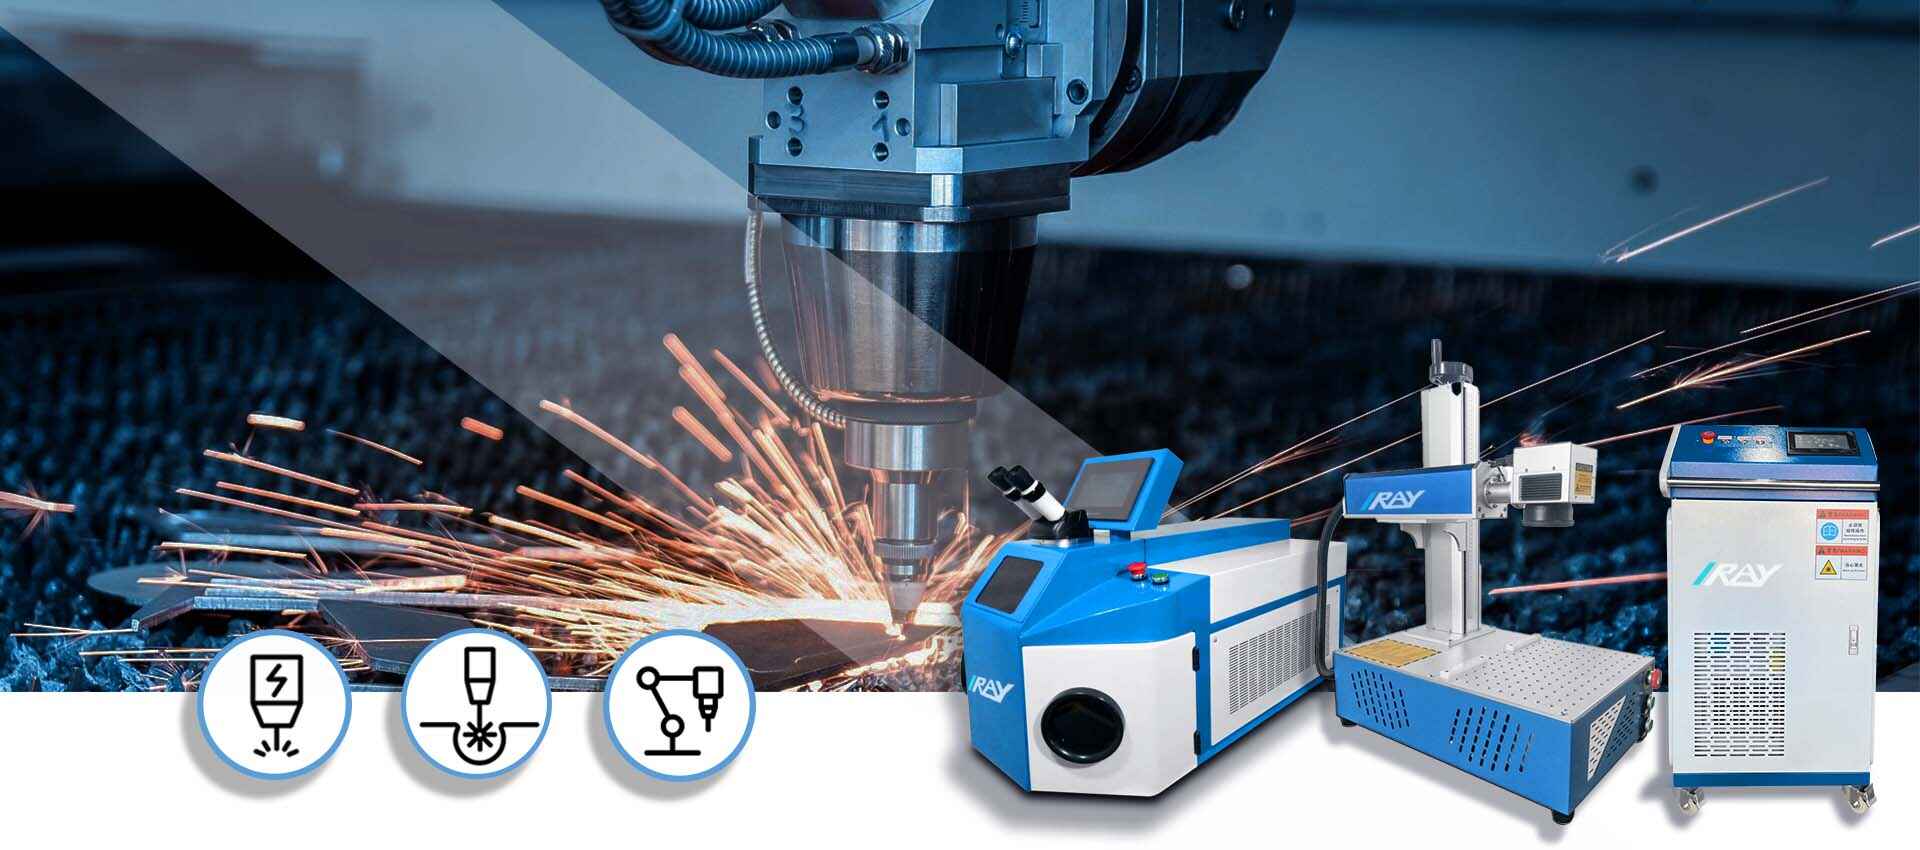 Laser industrial solutions